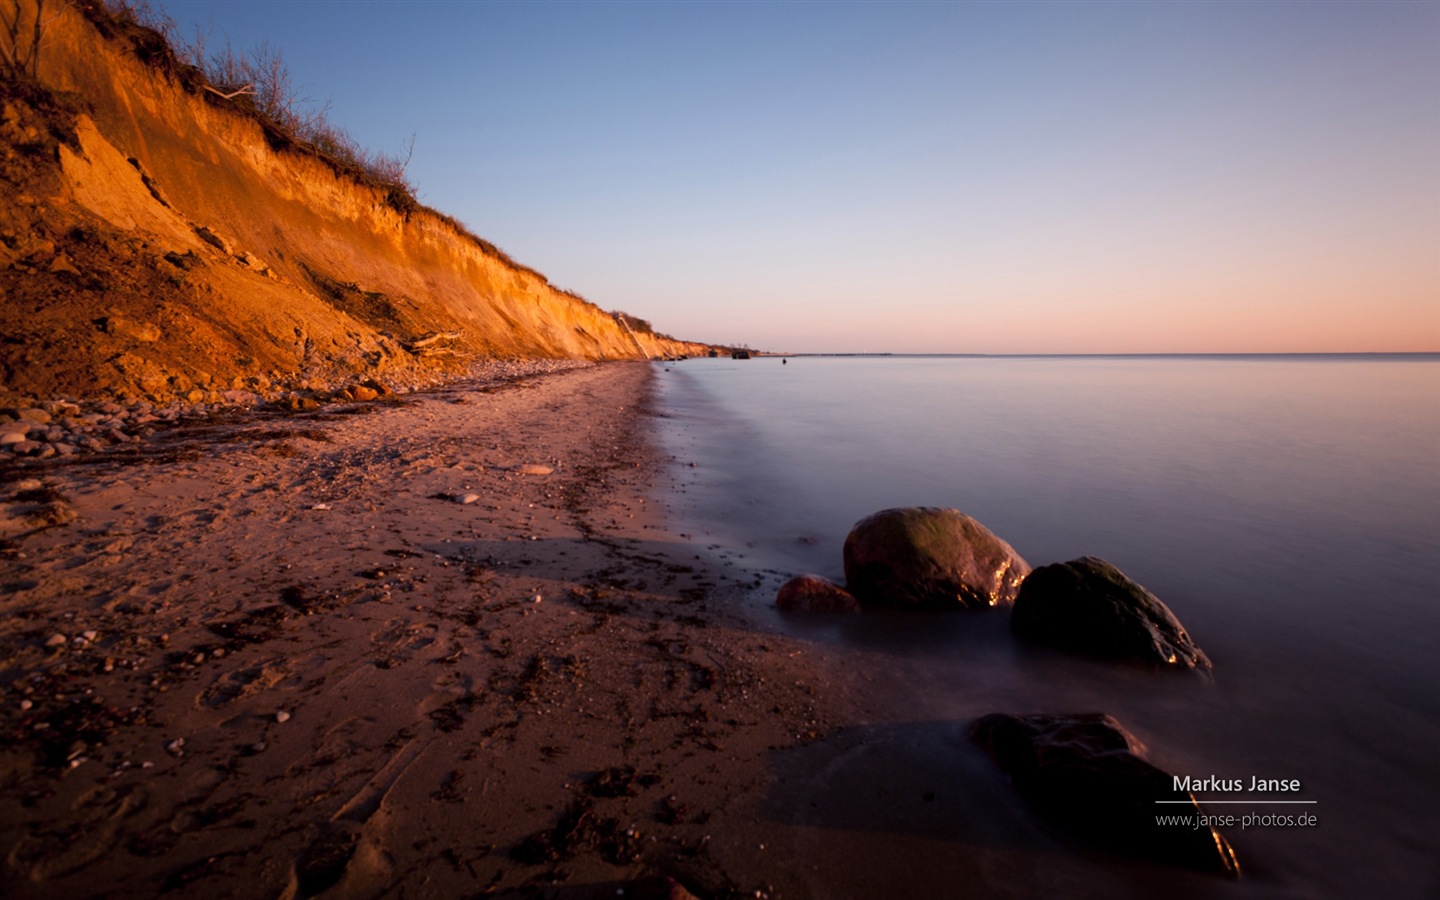 Beautiful coastal scenery in Germany, Windows 8 HD wallpapers #1 - 1440x900